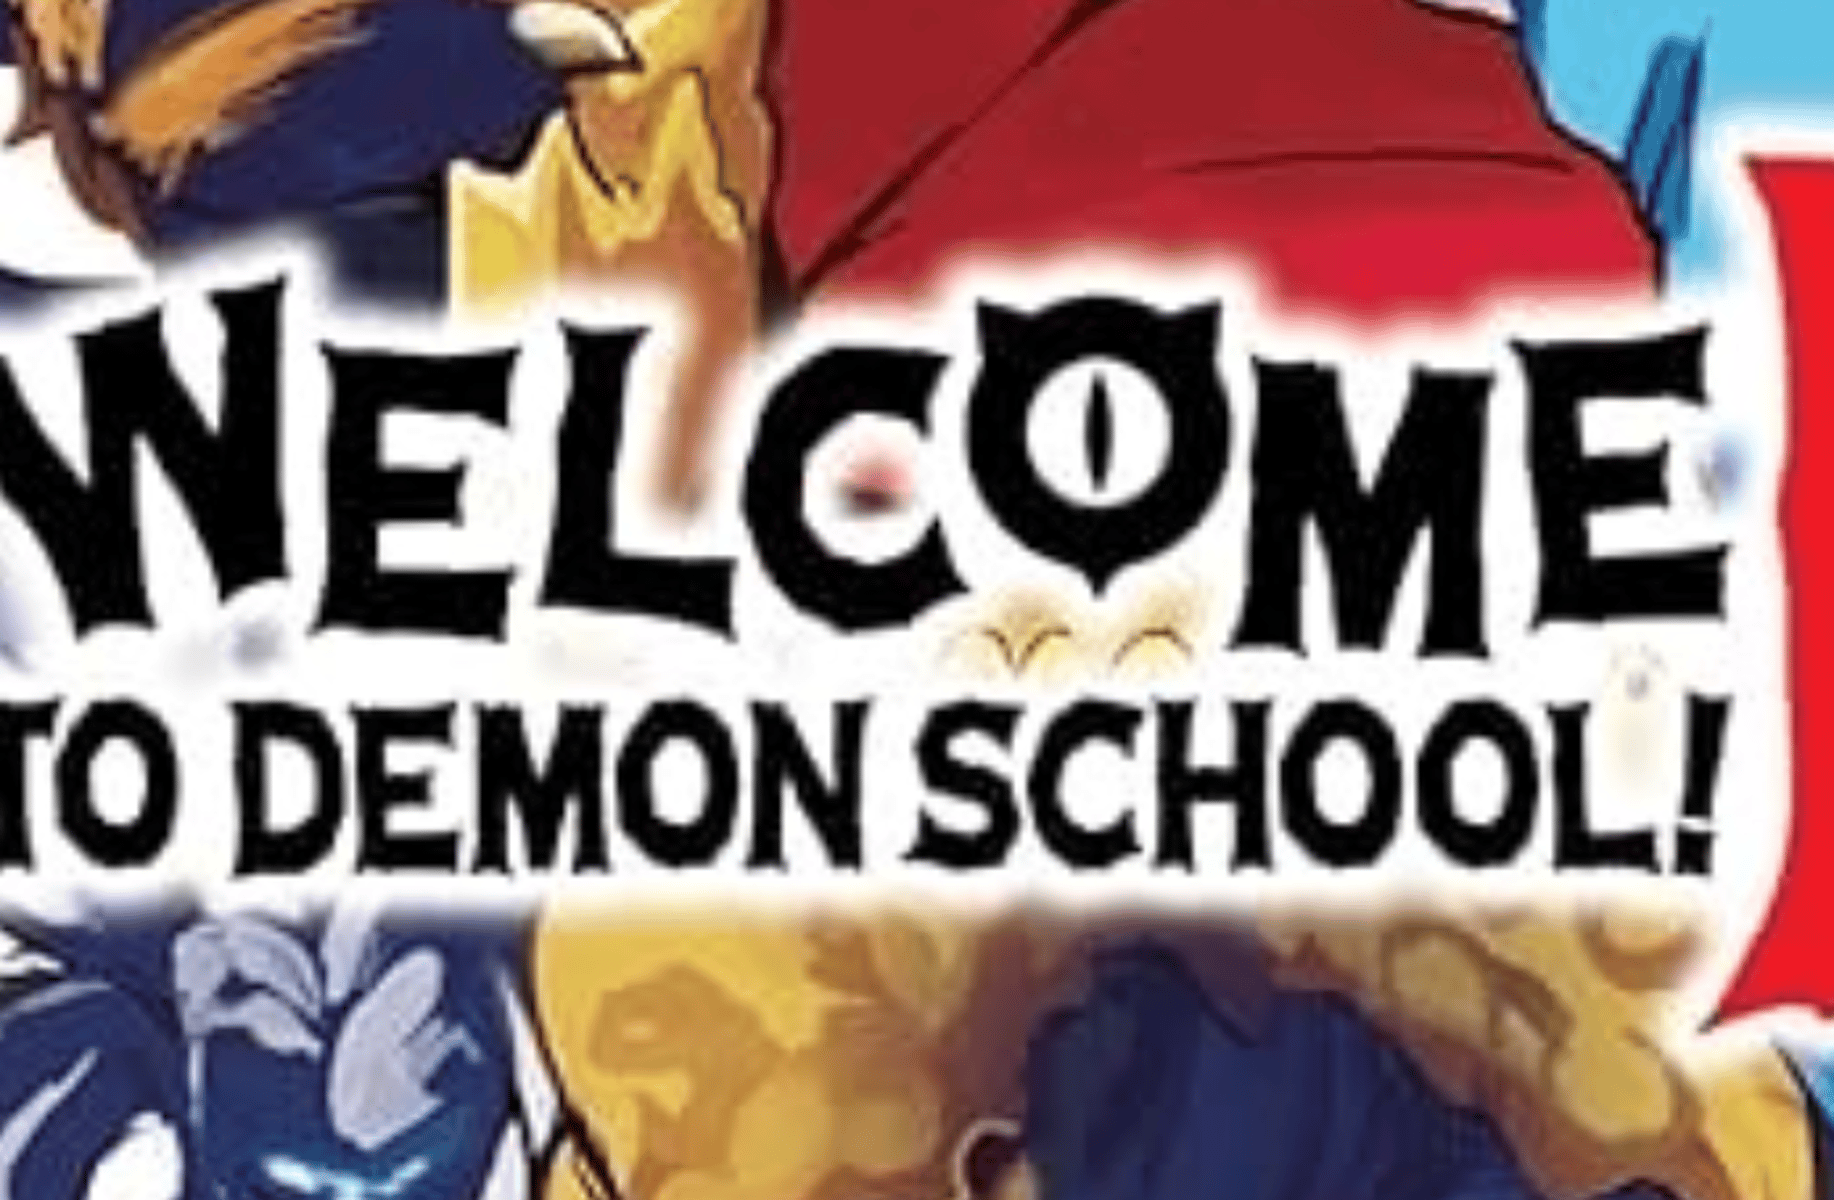 Welcome to Demon School!